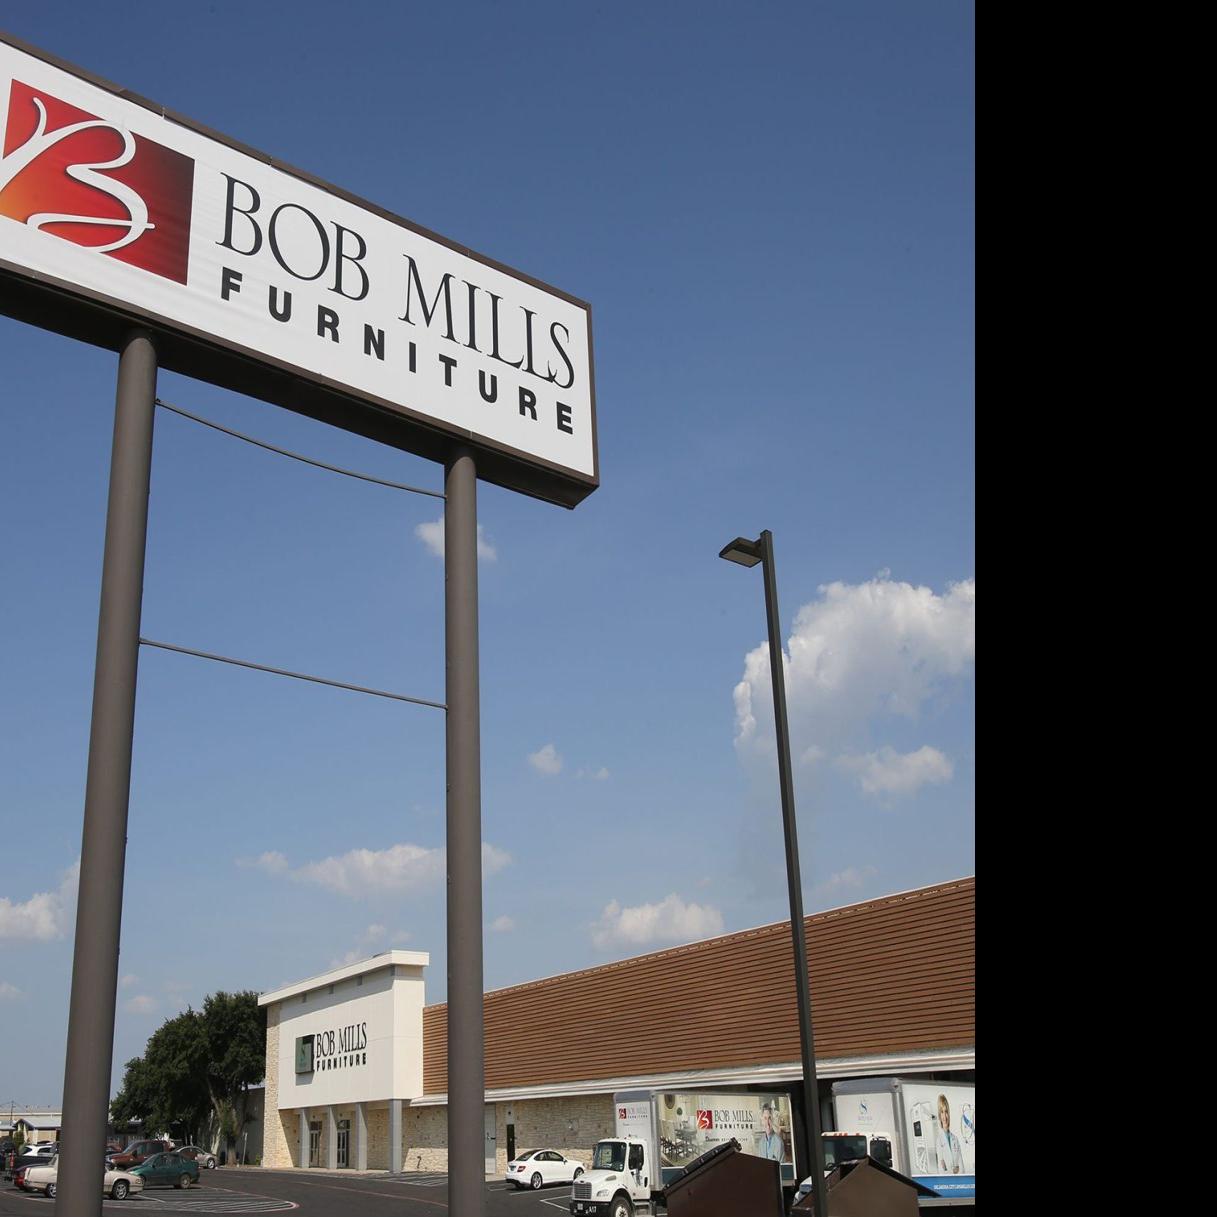 Former Waco Employees Sue Bob Mills Furniture Business